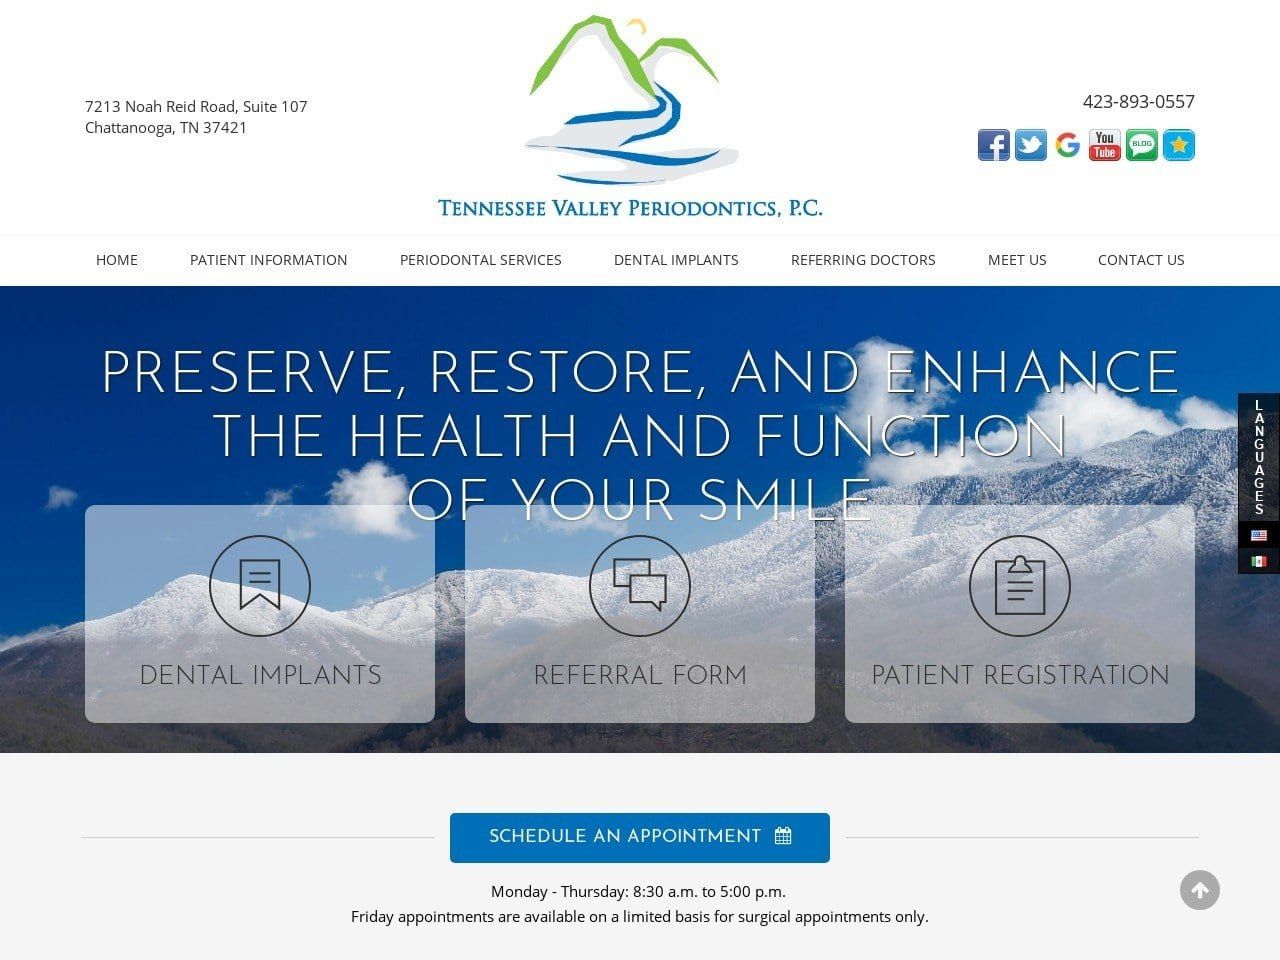 Tennessee Valley Periodontics Website Screenshot from tnvalleyperio.com